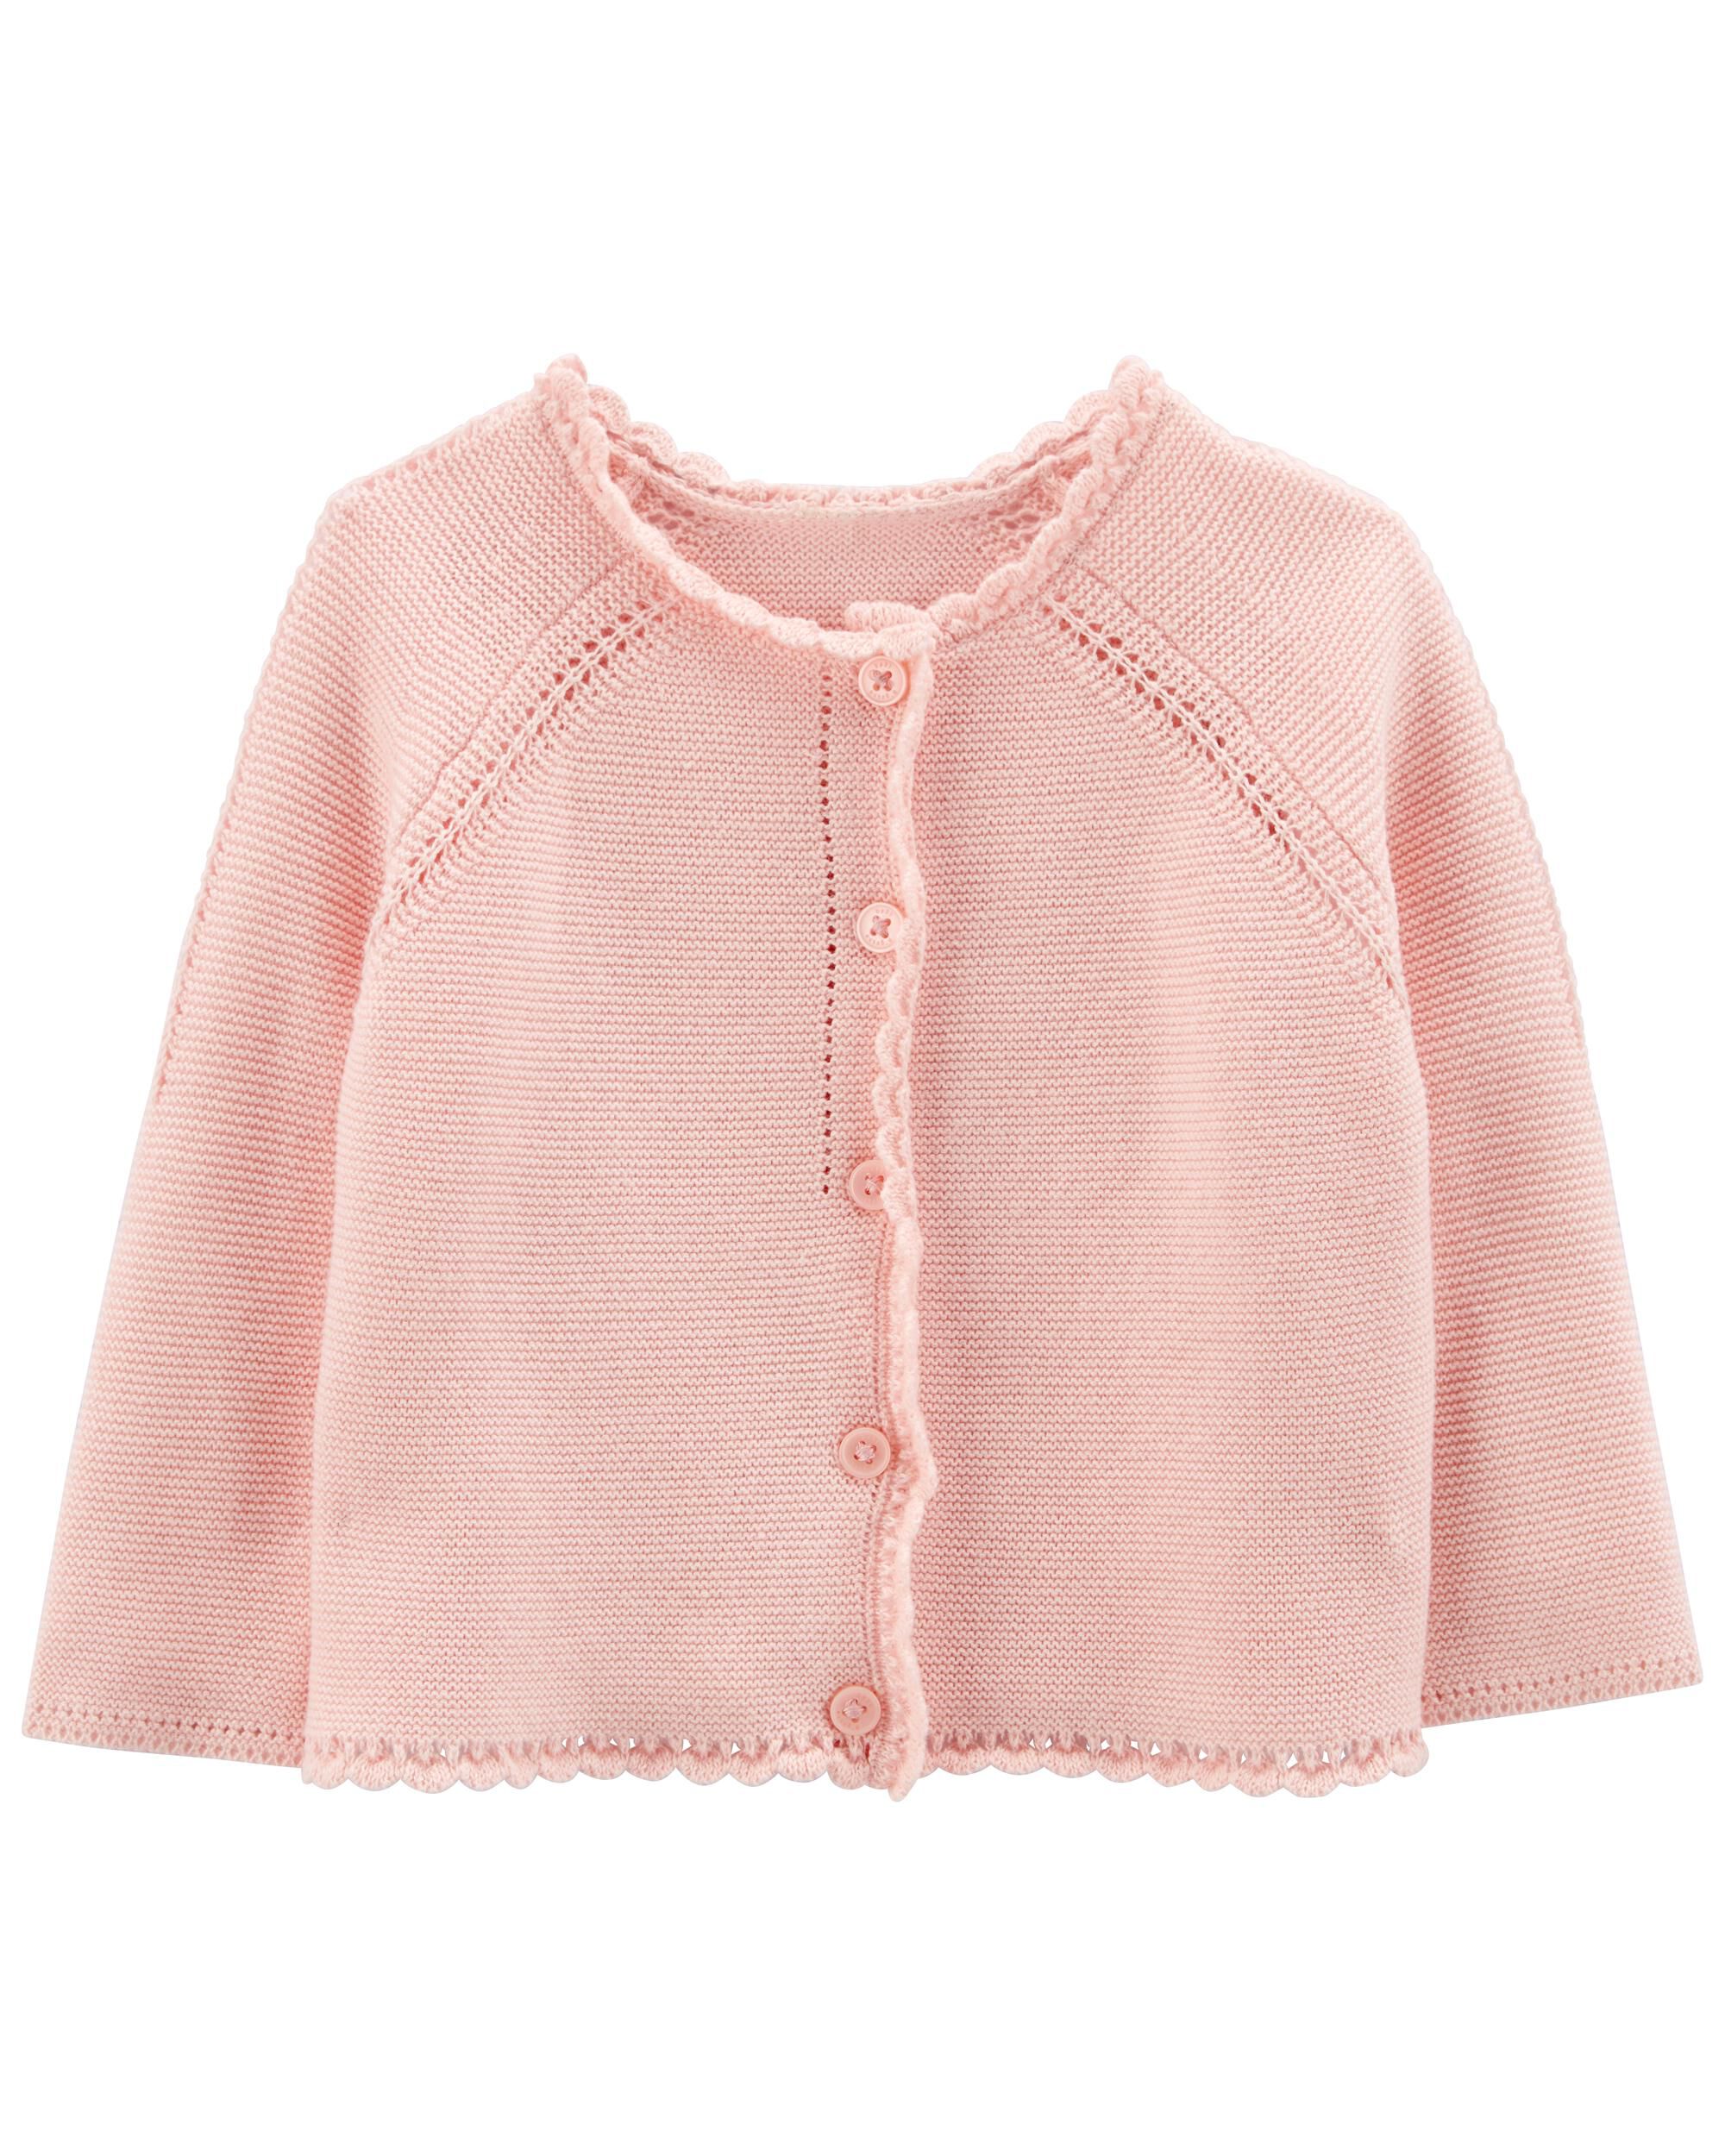 Carters Baby Cotton Yarn Sweater